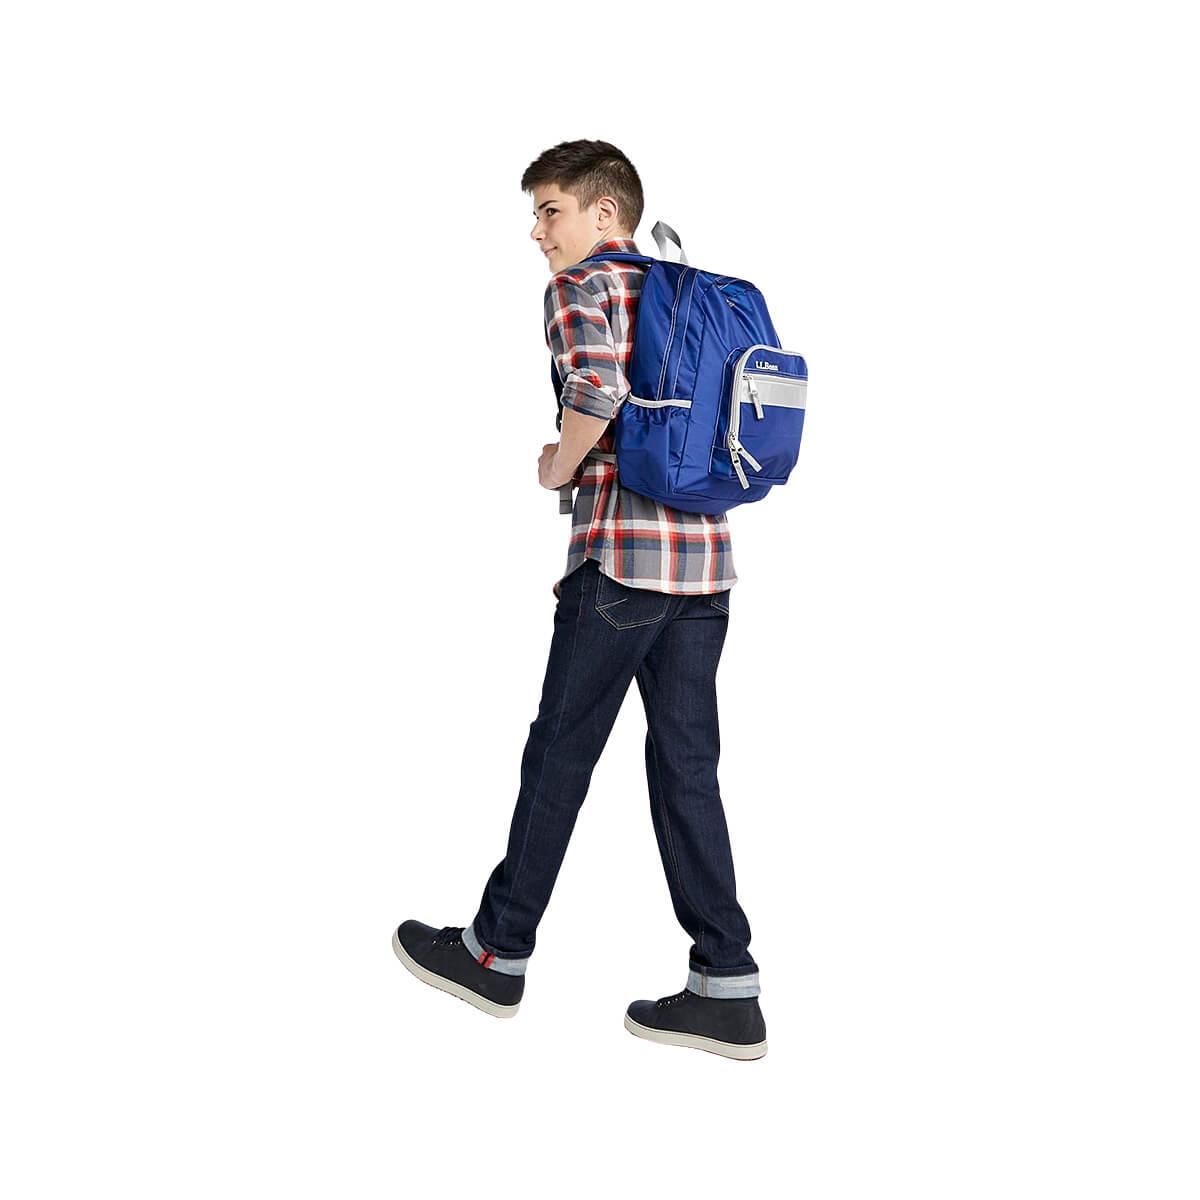 LL Bean junior Backpack